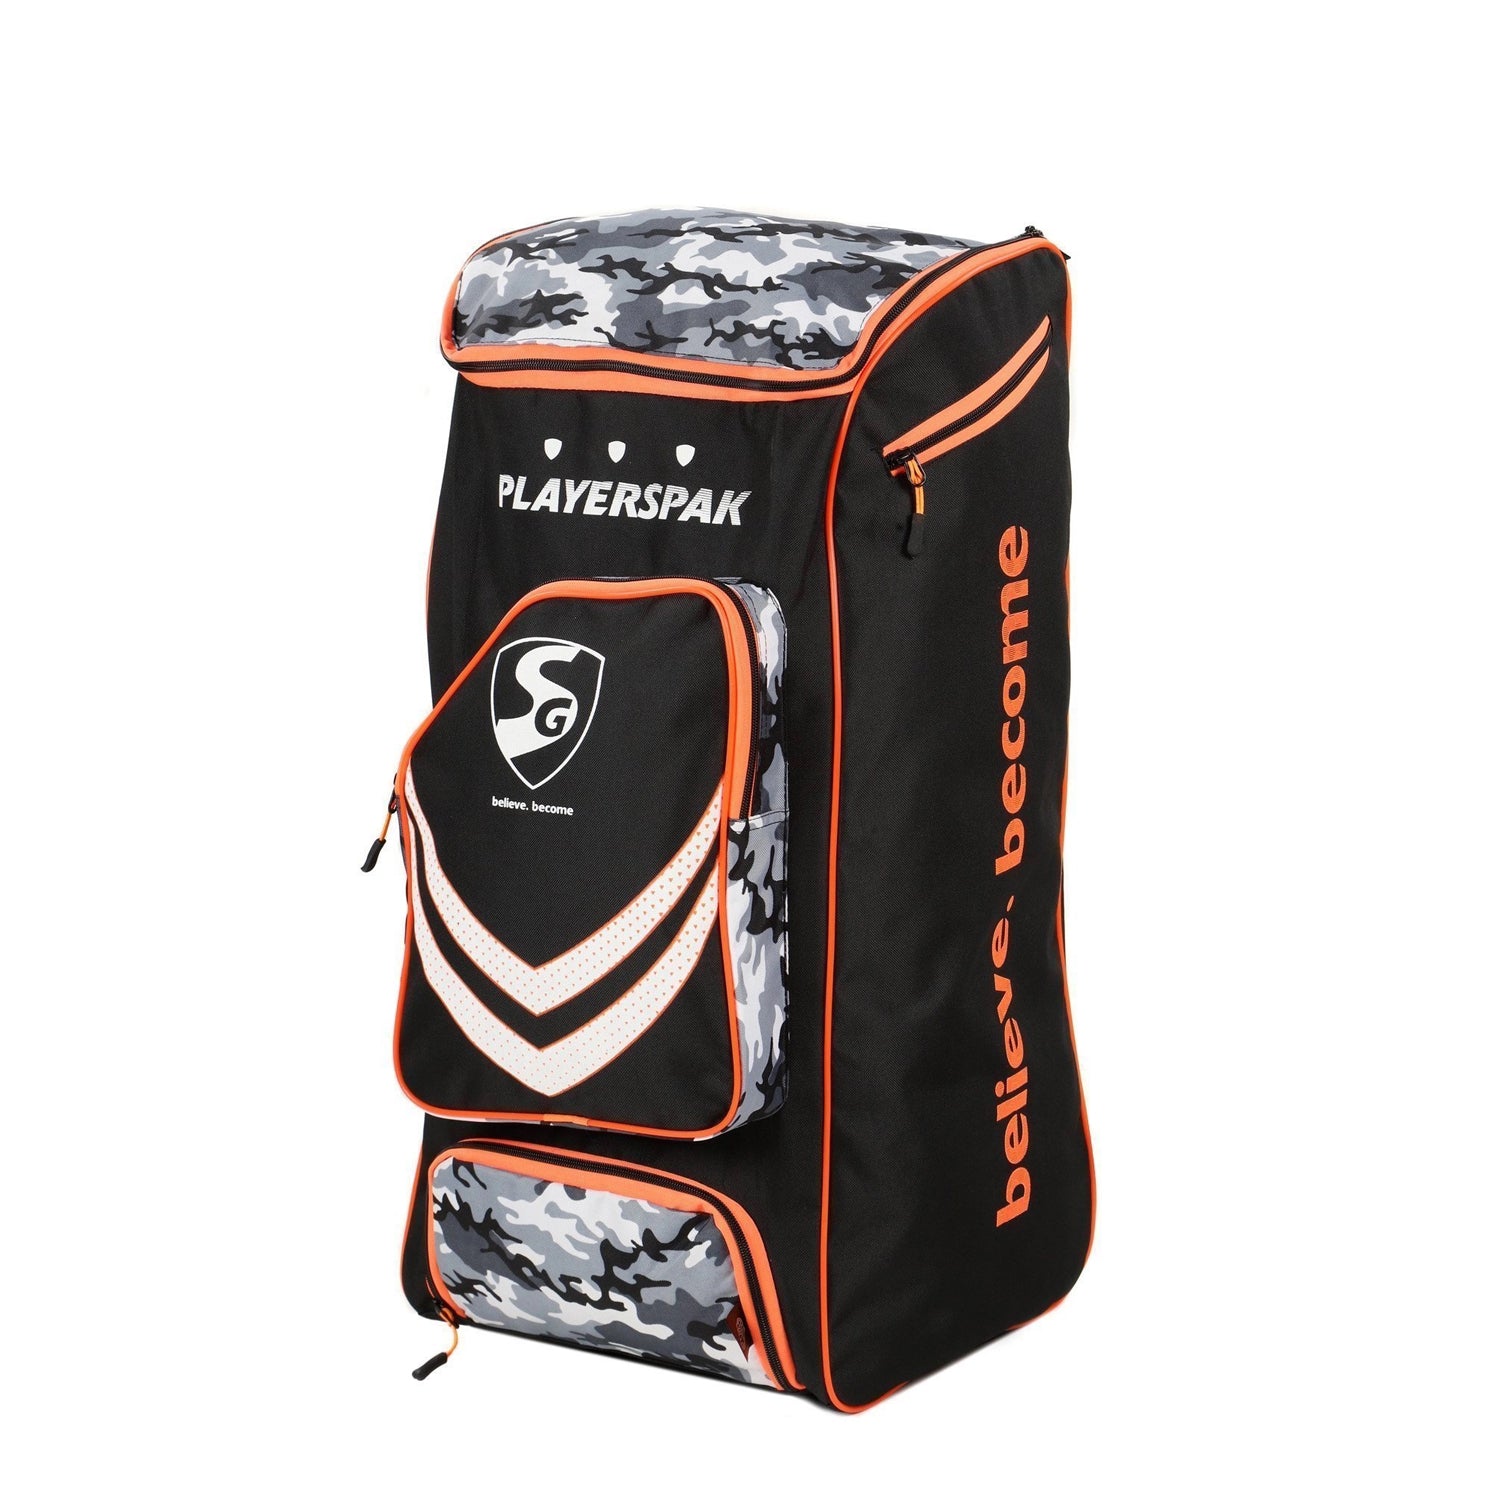 SG PRO PLAYERSPAK Cricket Kitbag, Large -Black/Orange - Best Price online Prokicksports.com